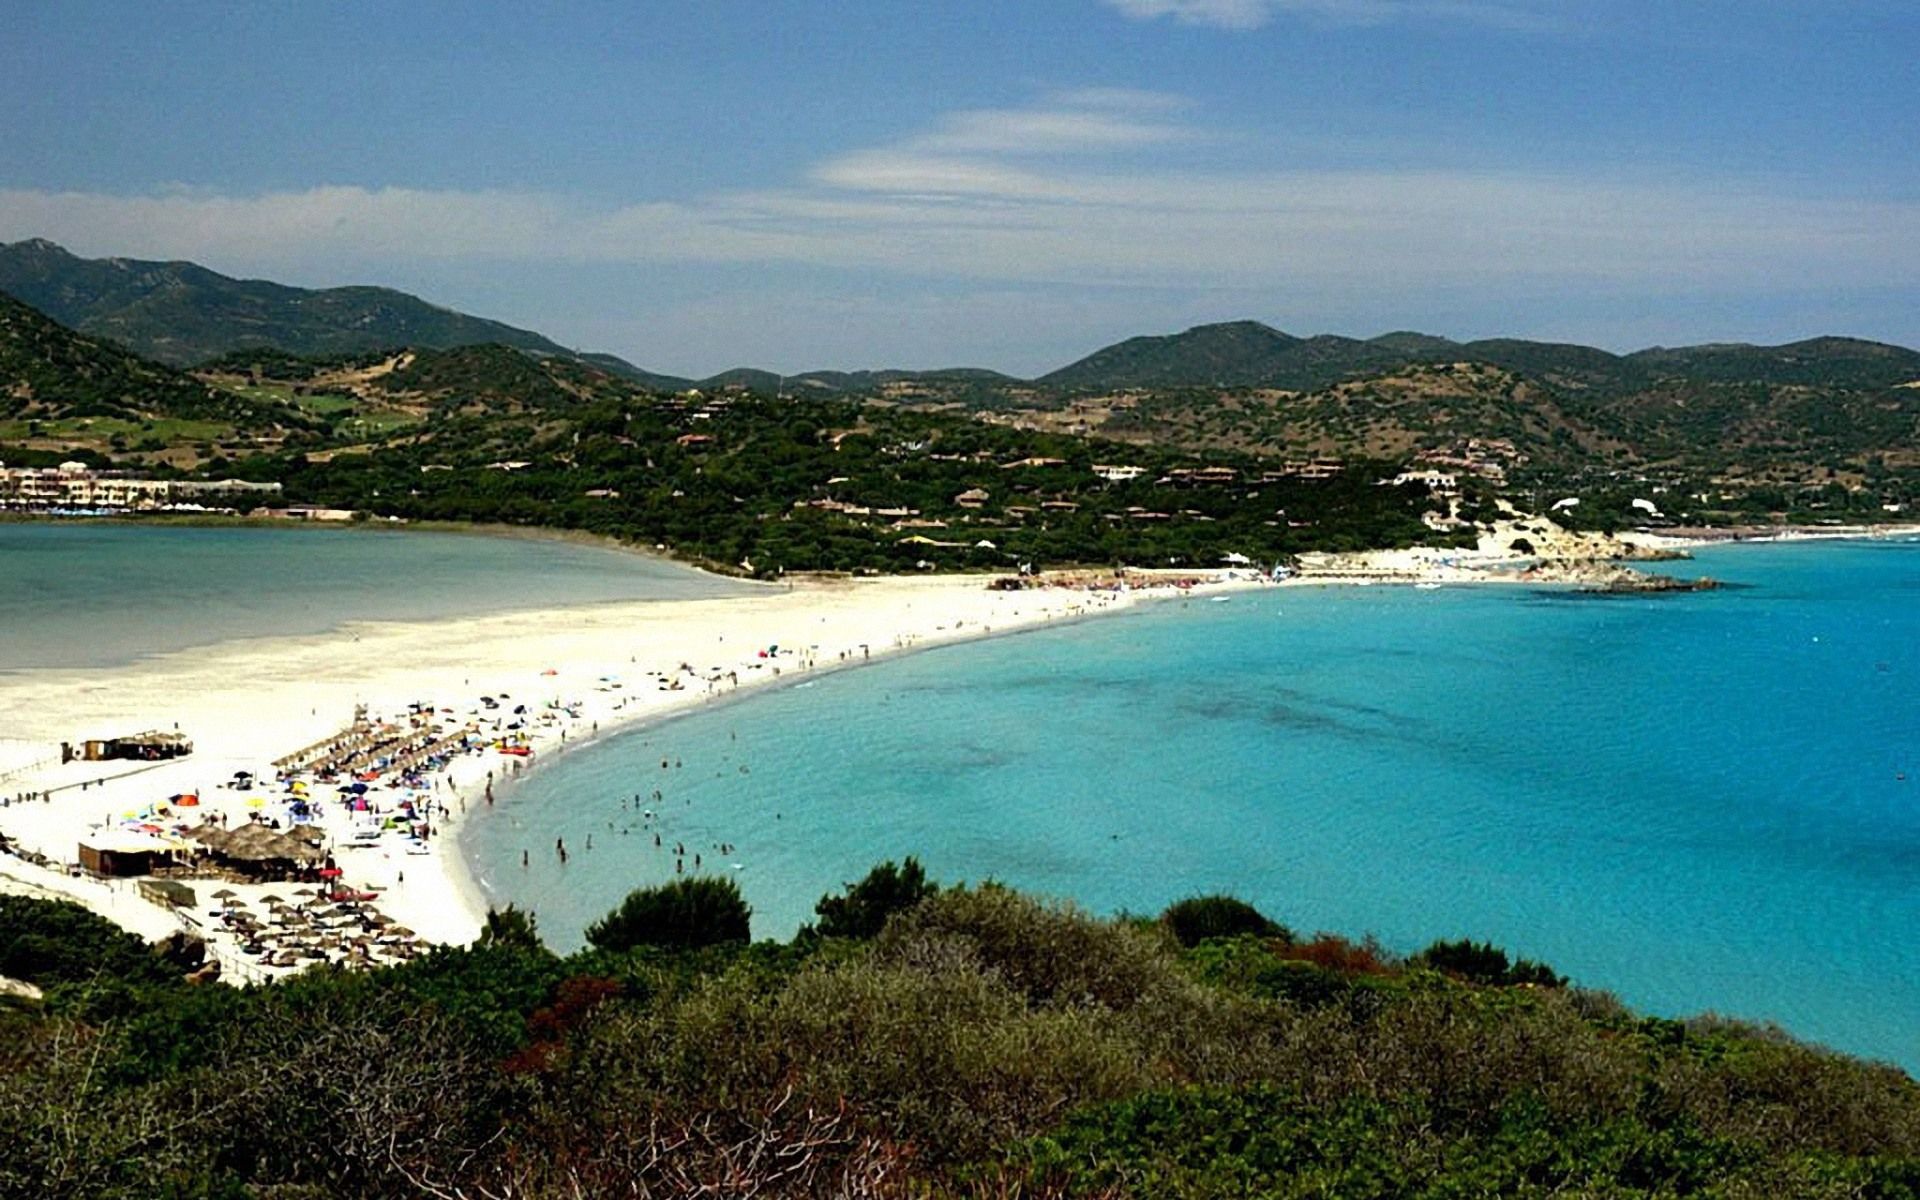 Spring vacation on the beach on the island of Sardinia, Italy